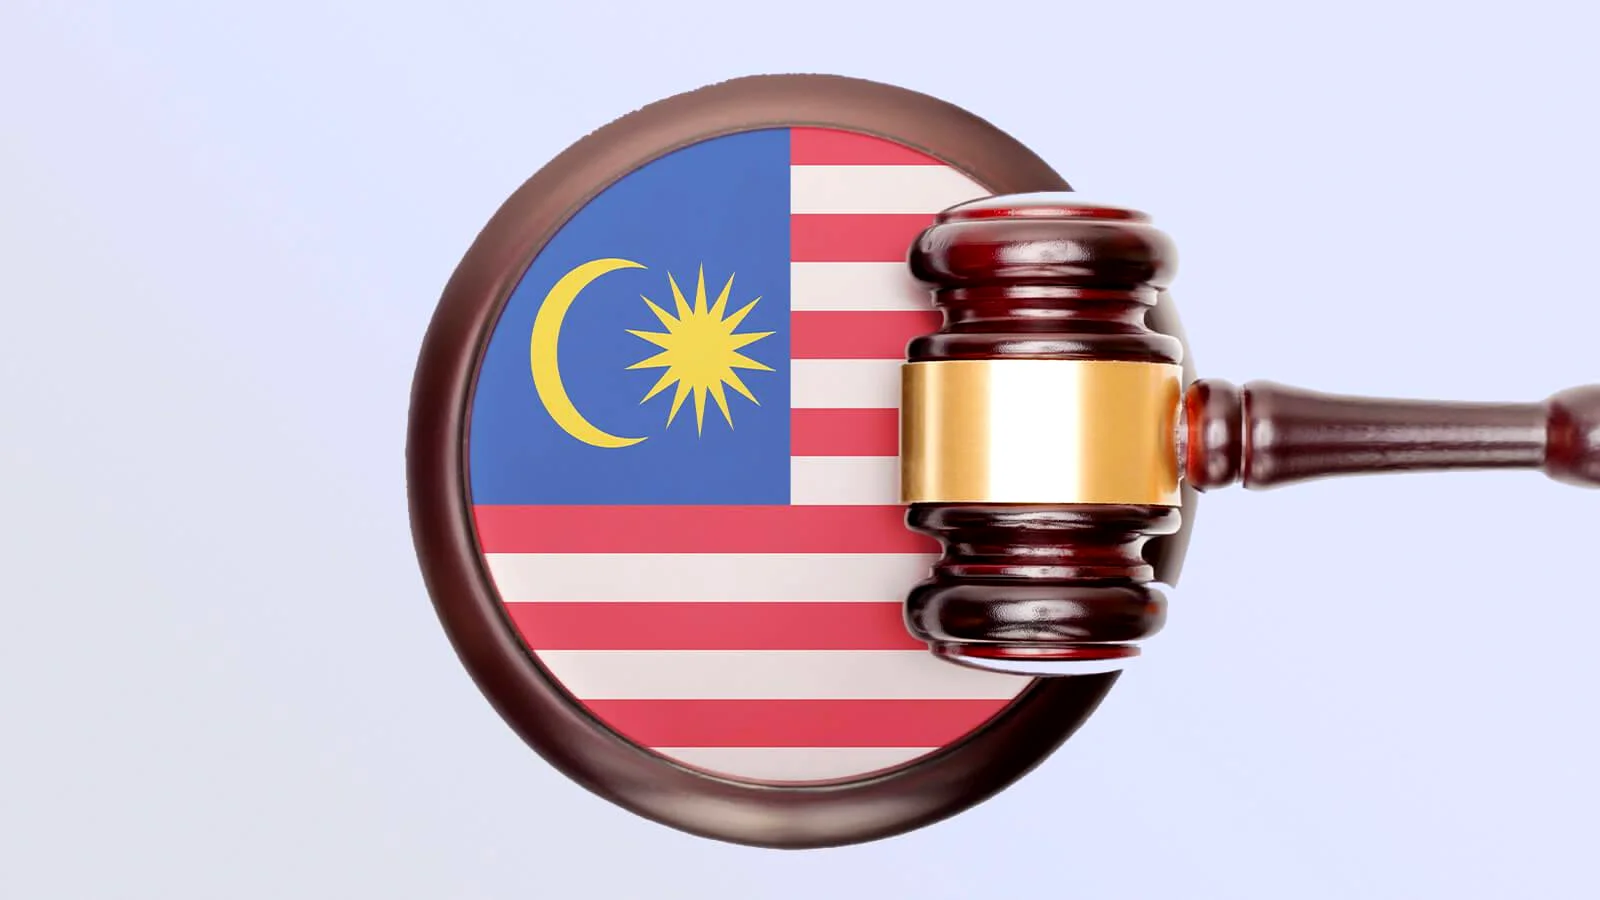 Malaysia flag with a gavel